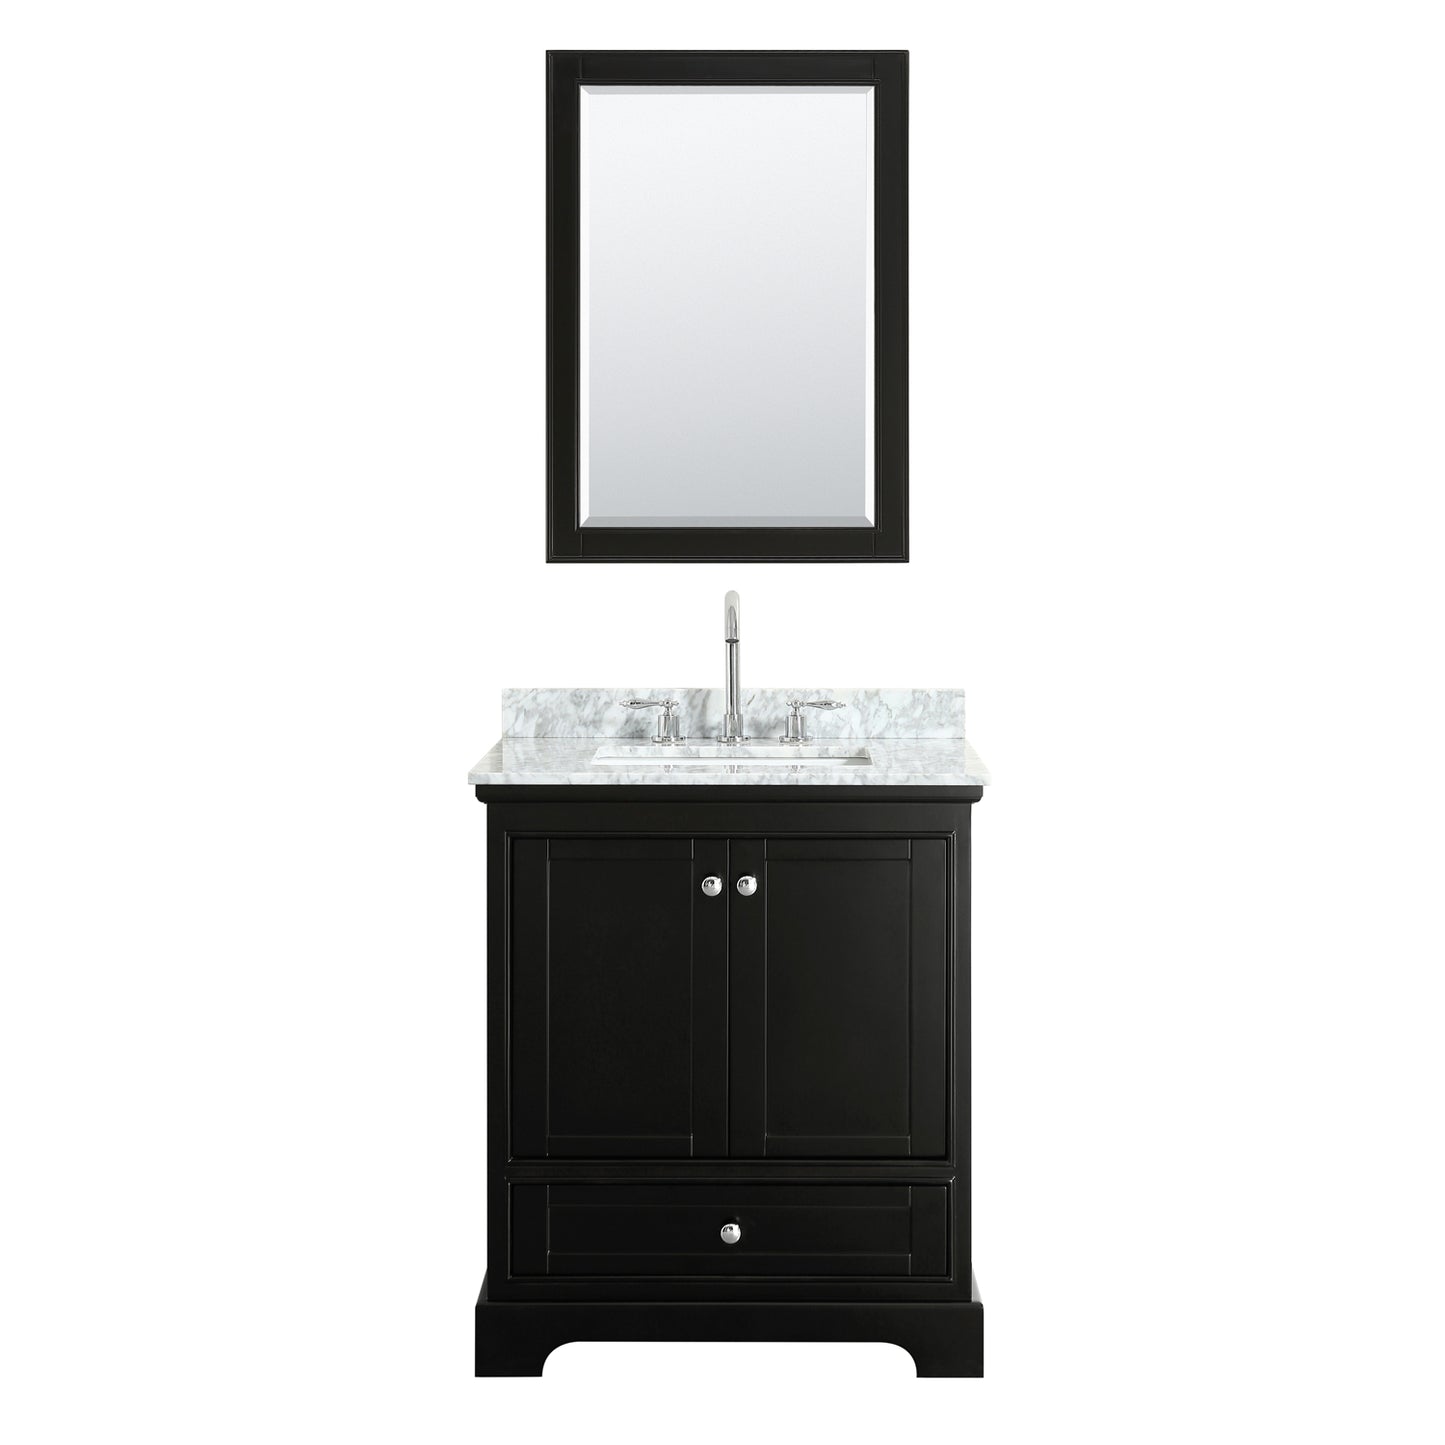 30 Inch Single Bathroom Vanity, White Carrara Marble Countertop, Undermount Square Sink, and 24 Inch Mirror - Luxe Bathroom Vanities Luxury Bathroom Fixtures Bathroom Furniture